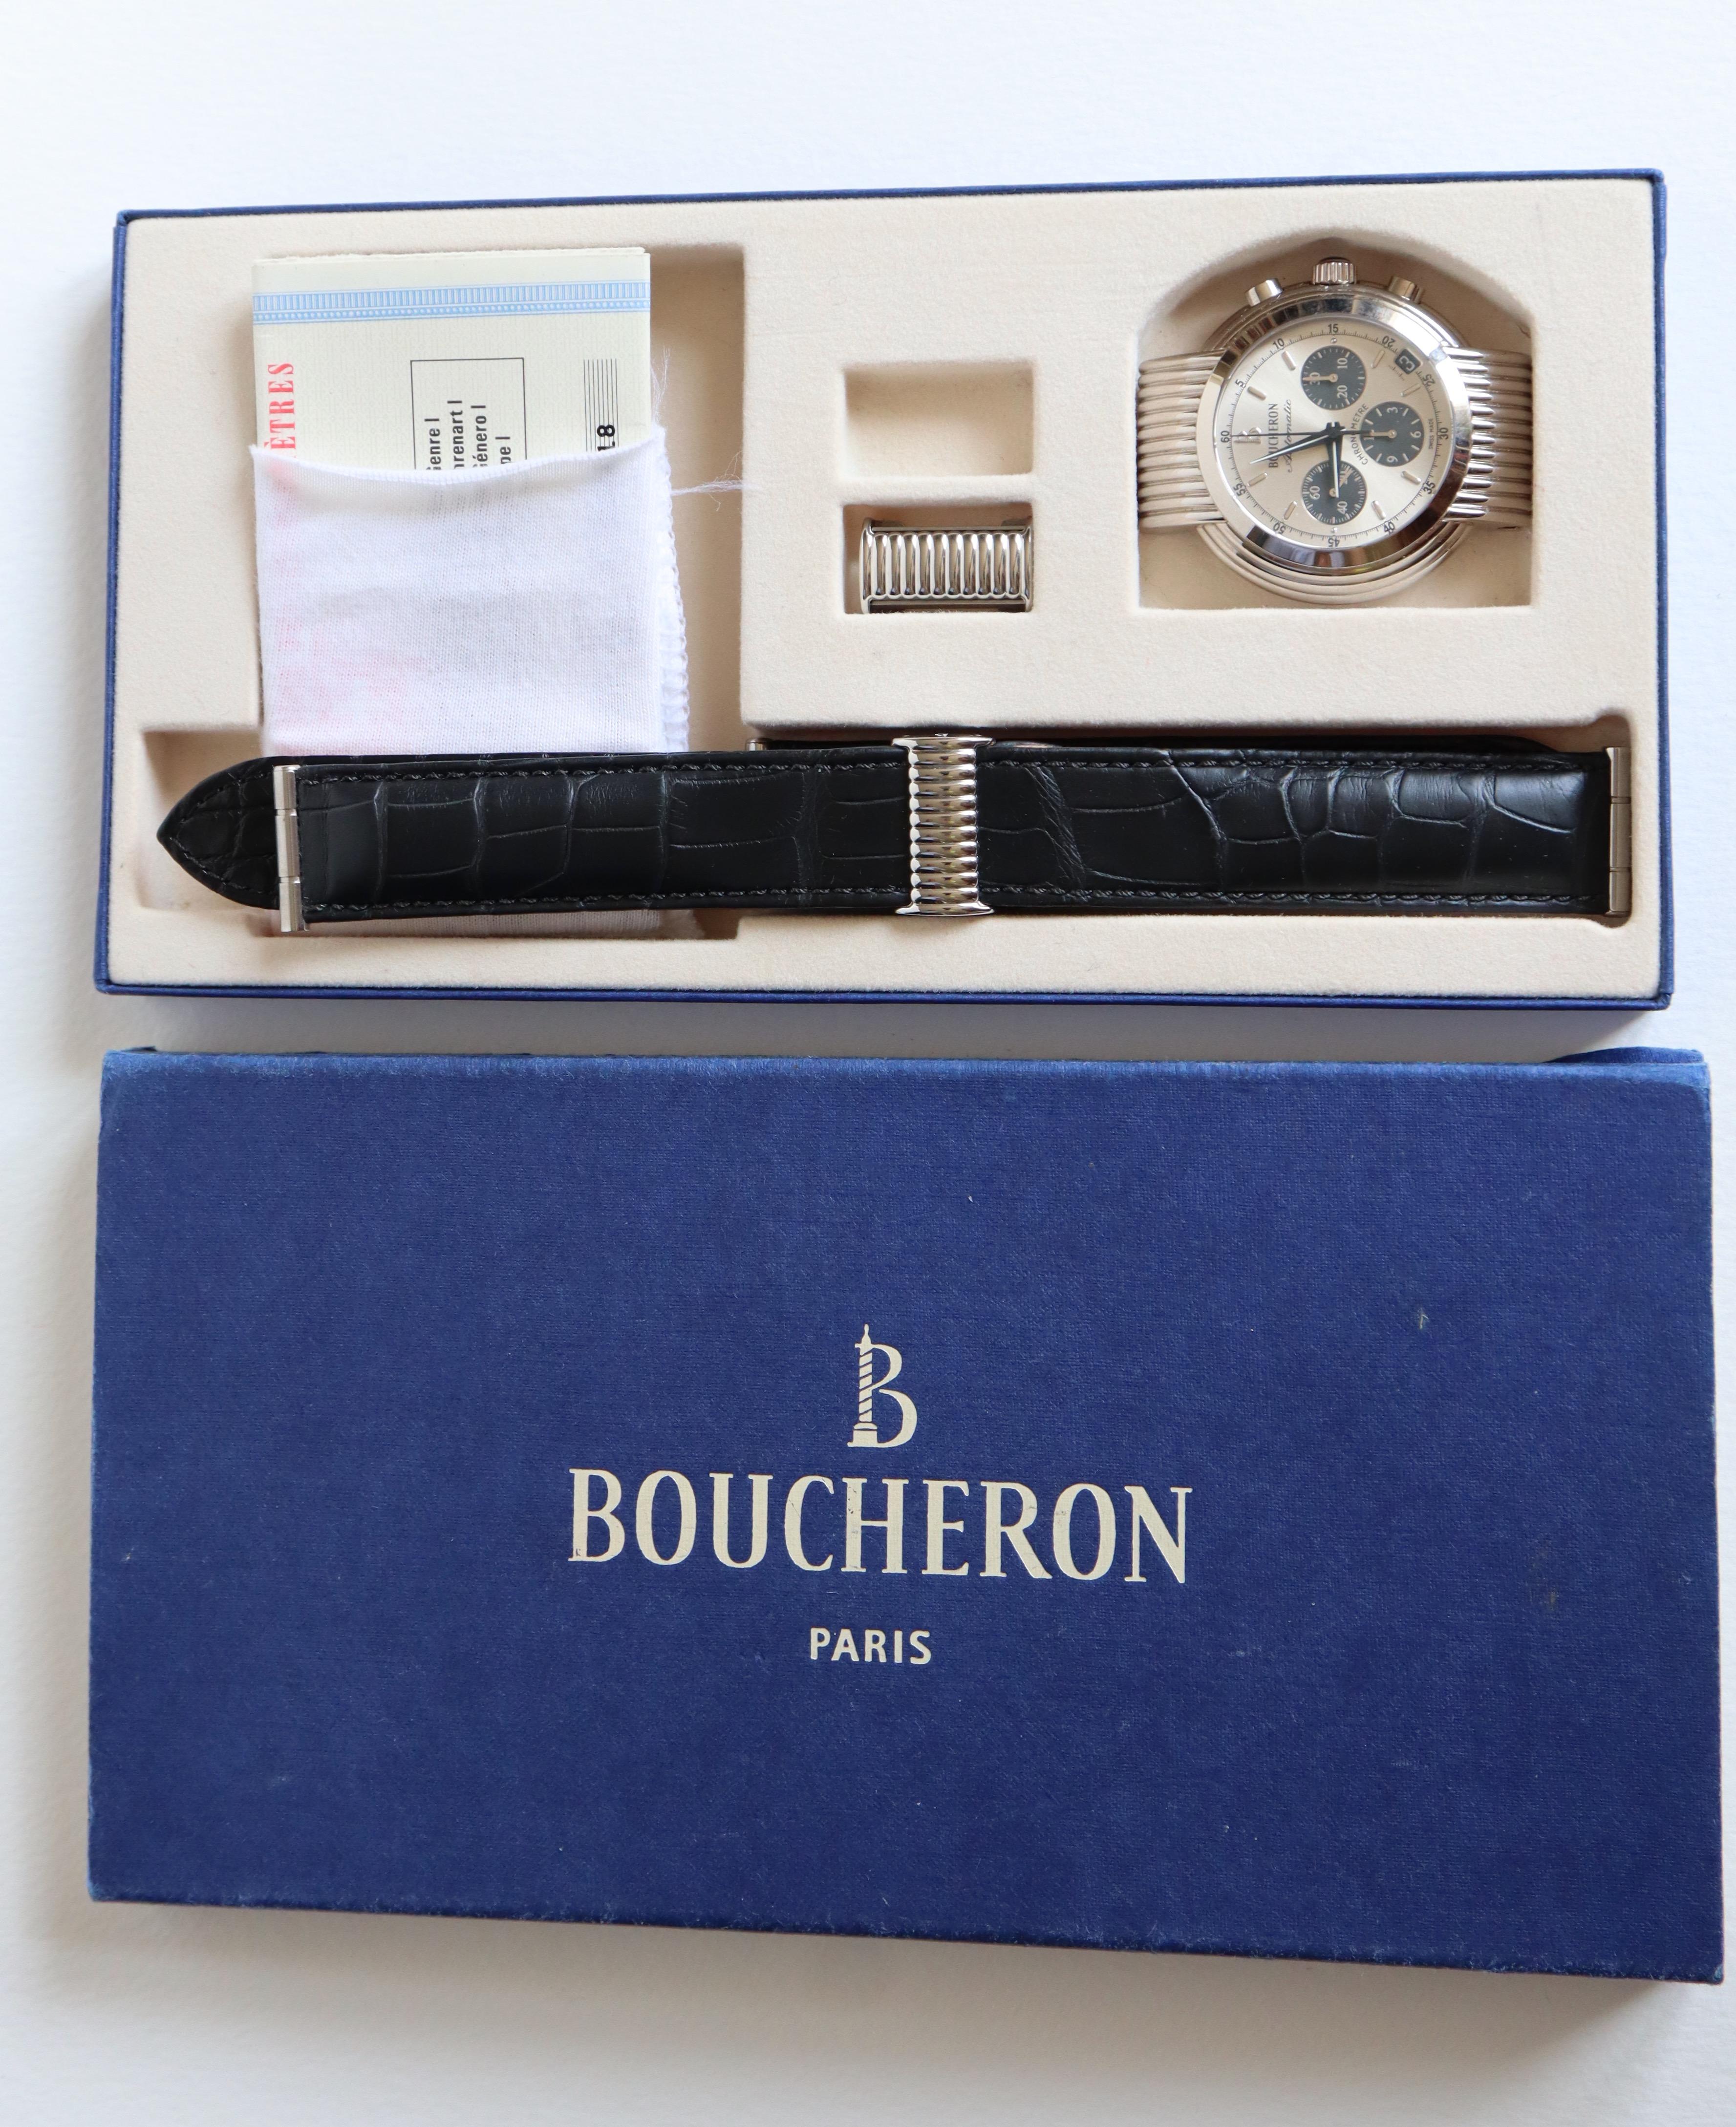 Boucheron 18K White Gold Watch Solis Chrono Automatic Model for Men For Sale 3